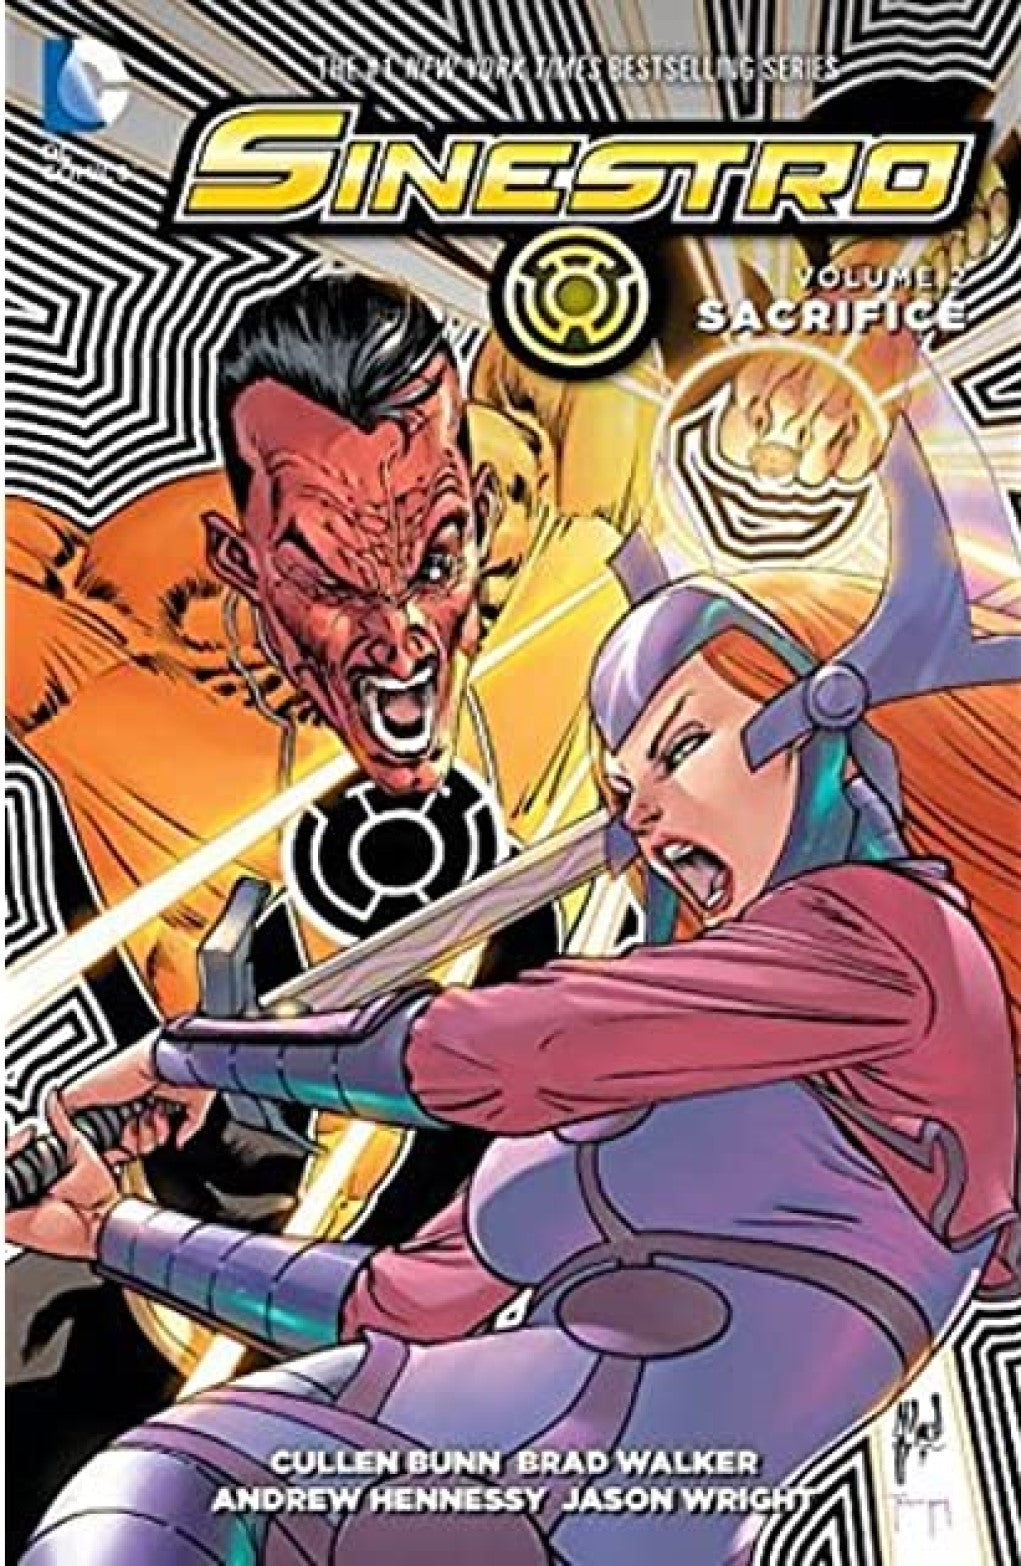 Sinestro Volume 2 Sacrifice - The Comic Warehouse